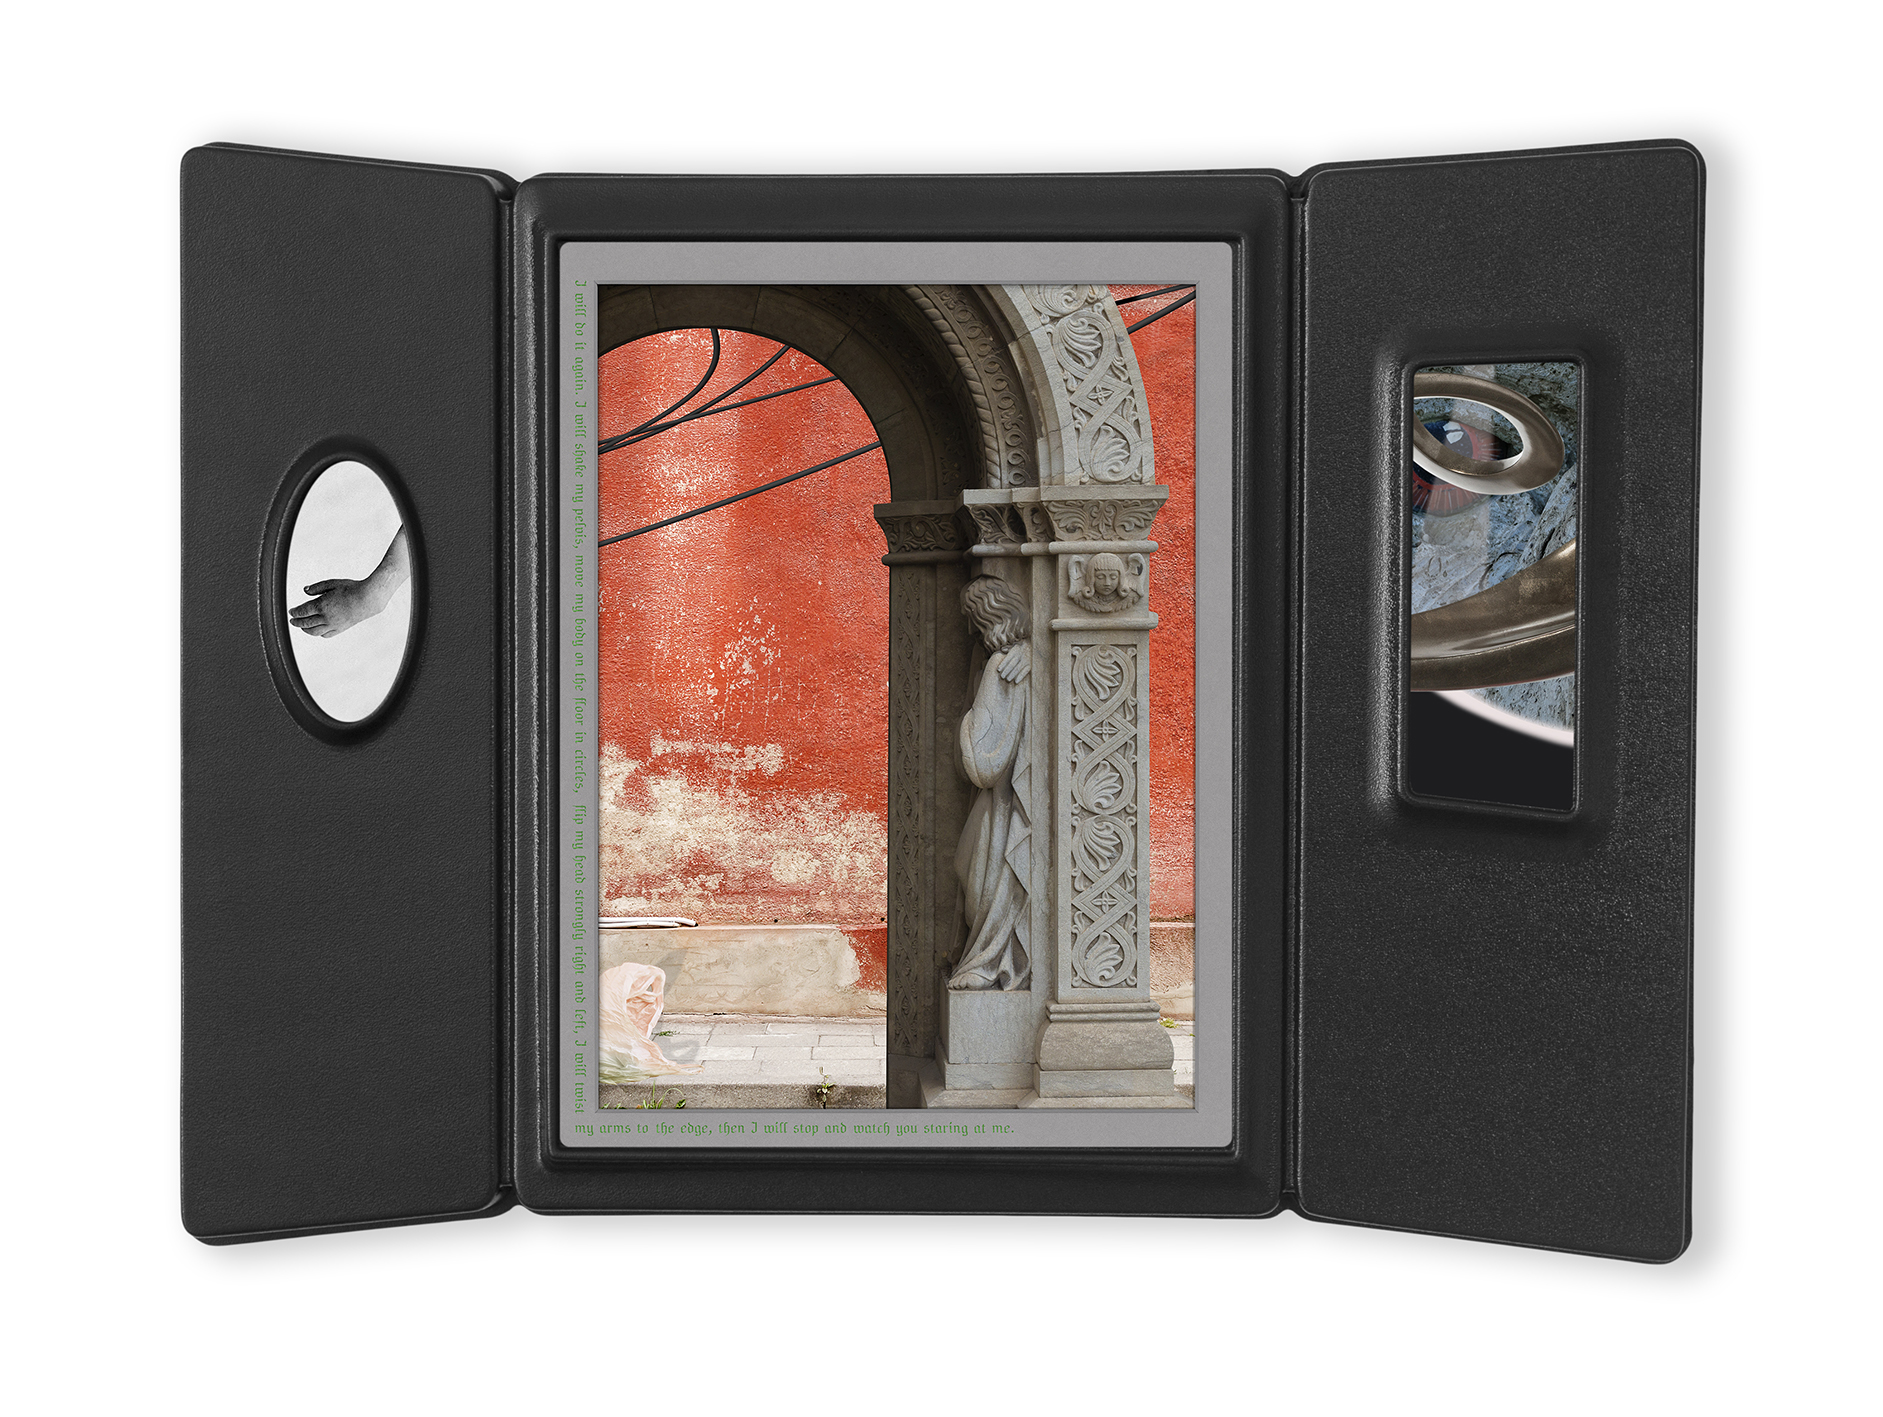 Catherine (case 1001)
2020, inkjet prints, acrylic face mount, vacuum formed frame, 51.5x70x5 cm